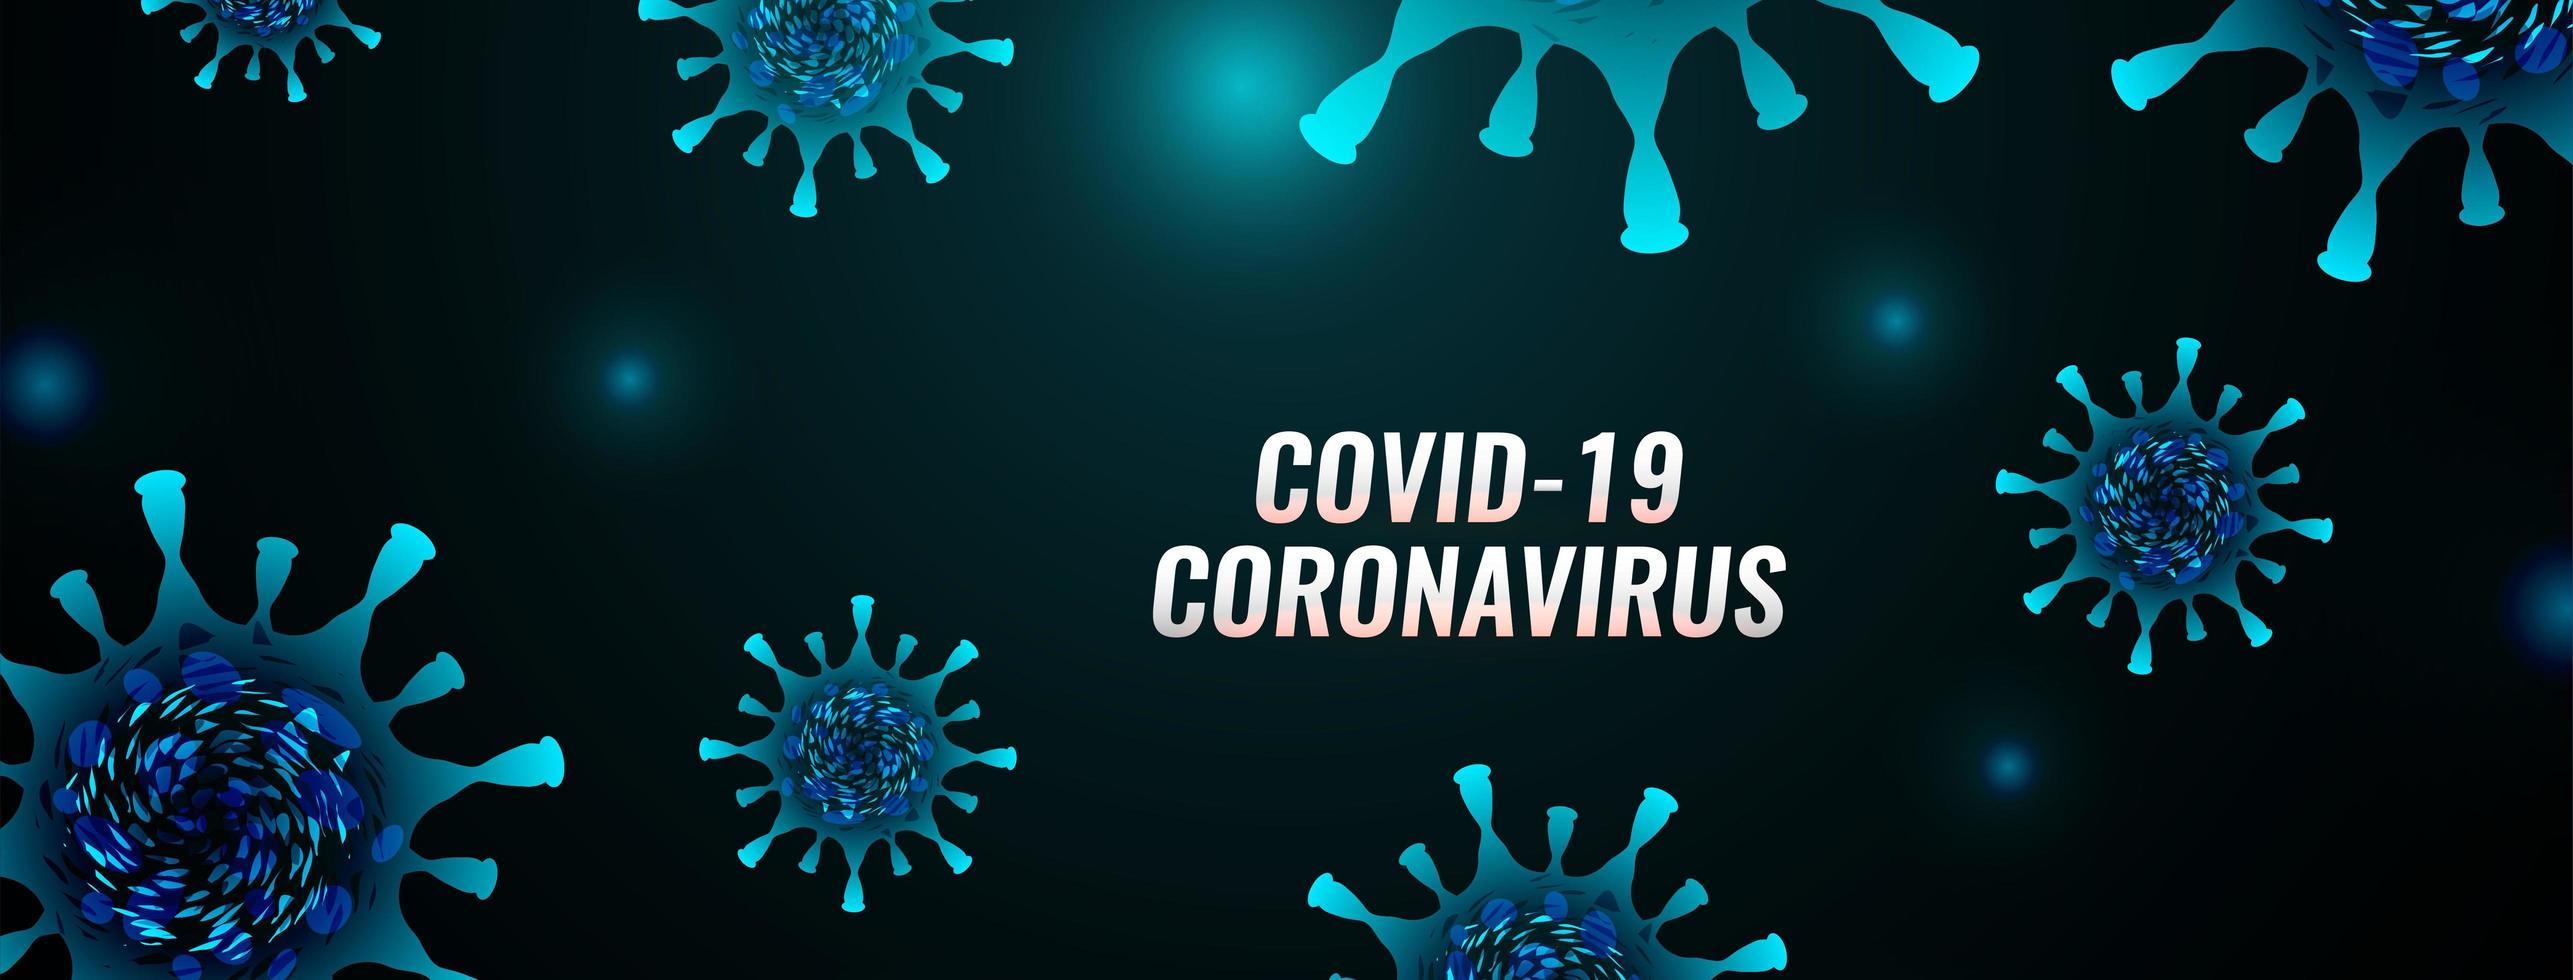 Covid-19 Coronavirus-Krankheit Banner vektor